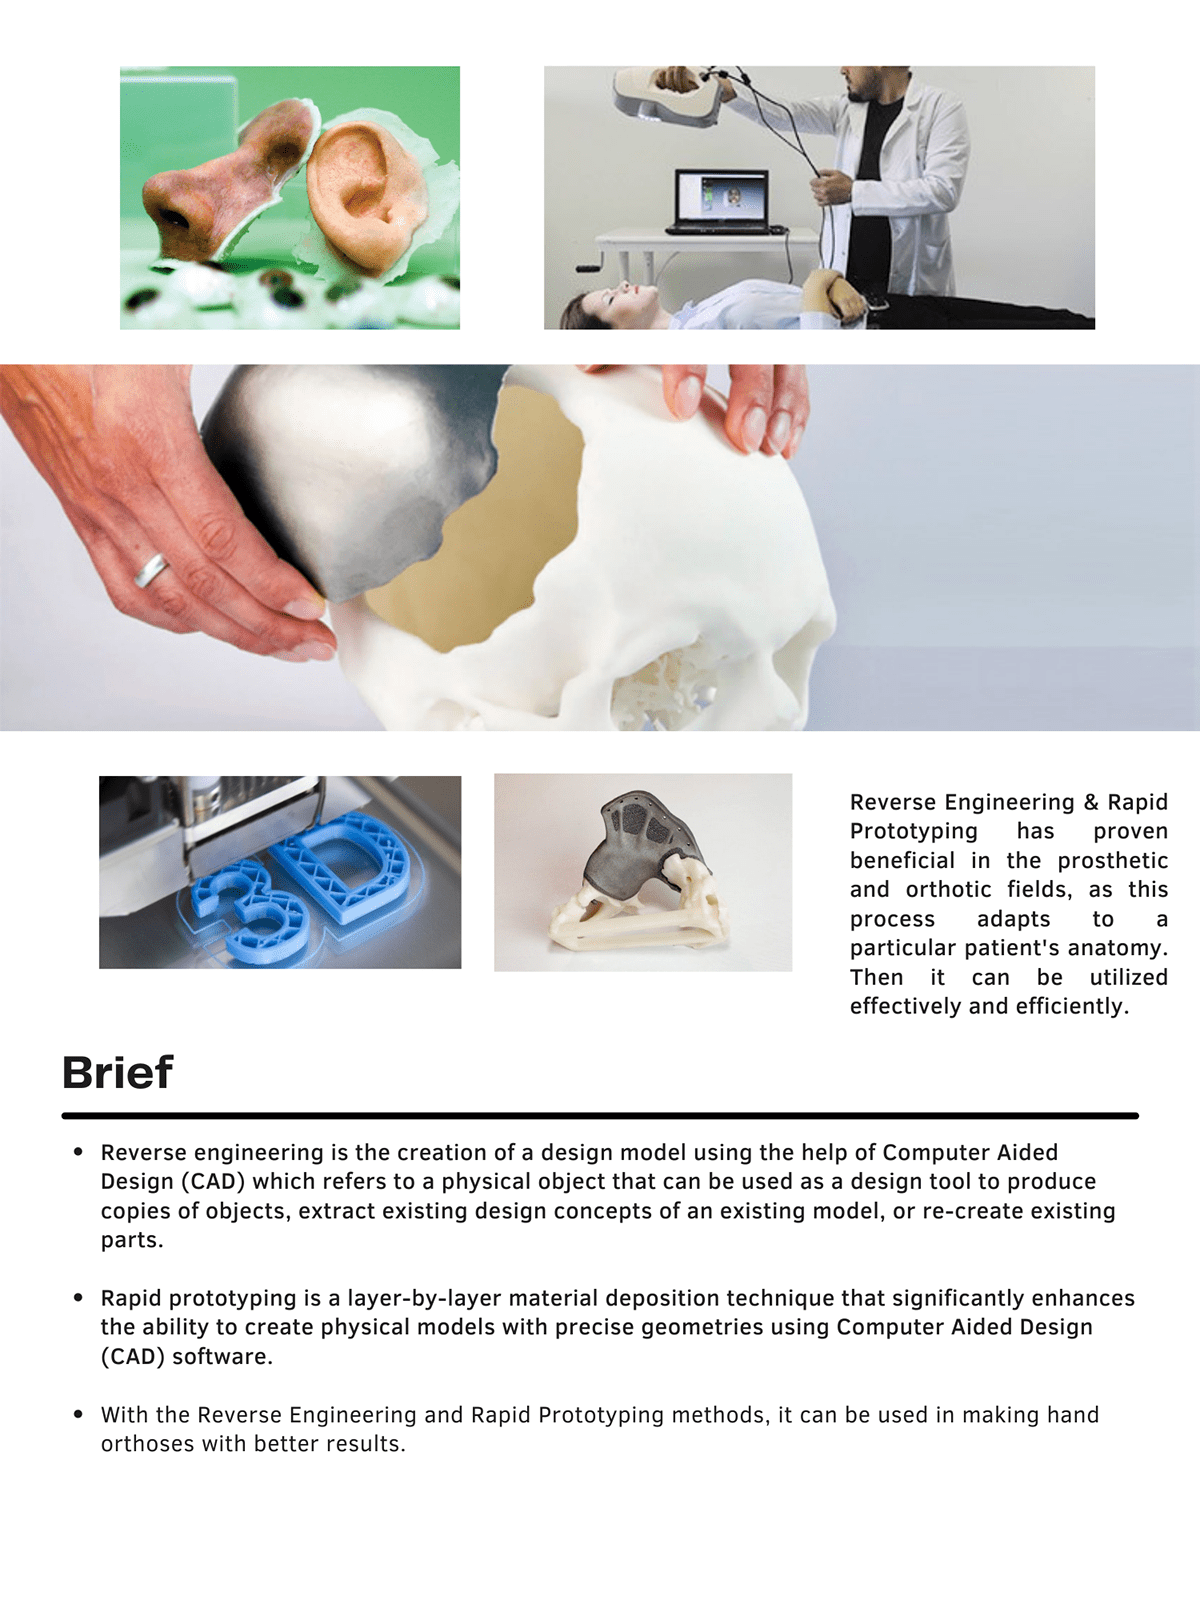 3dprint hand industrialdesign medical orthosis productdesign reverseengineering